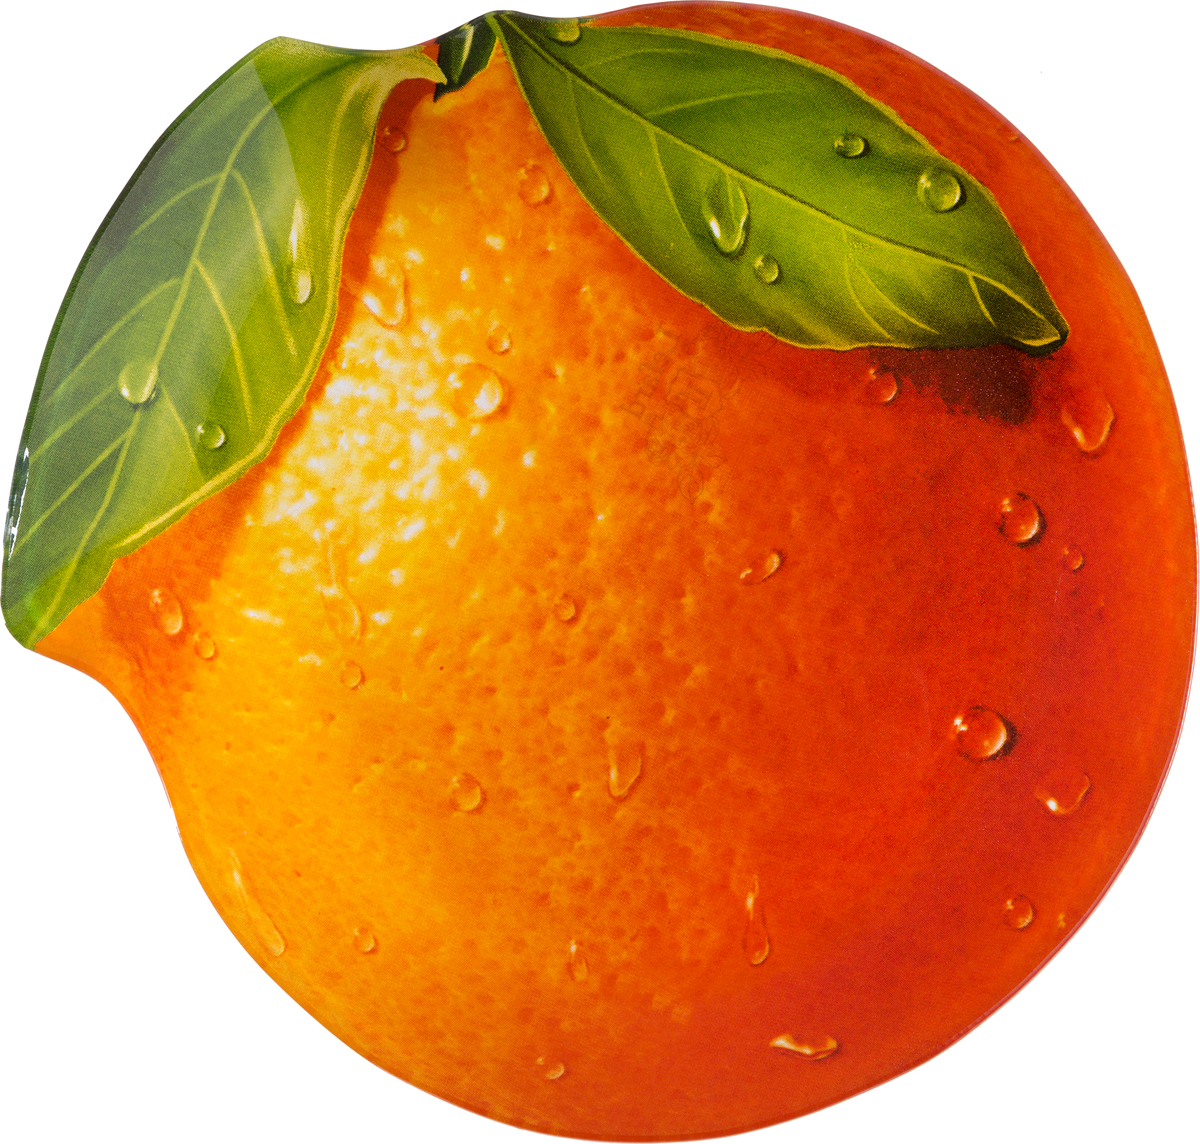 Маска мандарина. Маски фрукты. Маска апельсина для детей. Мандариновая маска. Маска ободок фрукты.